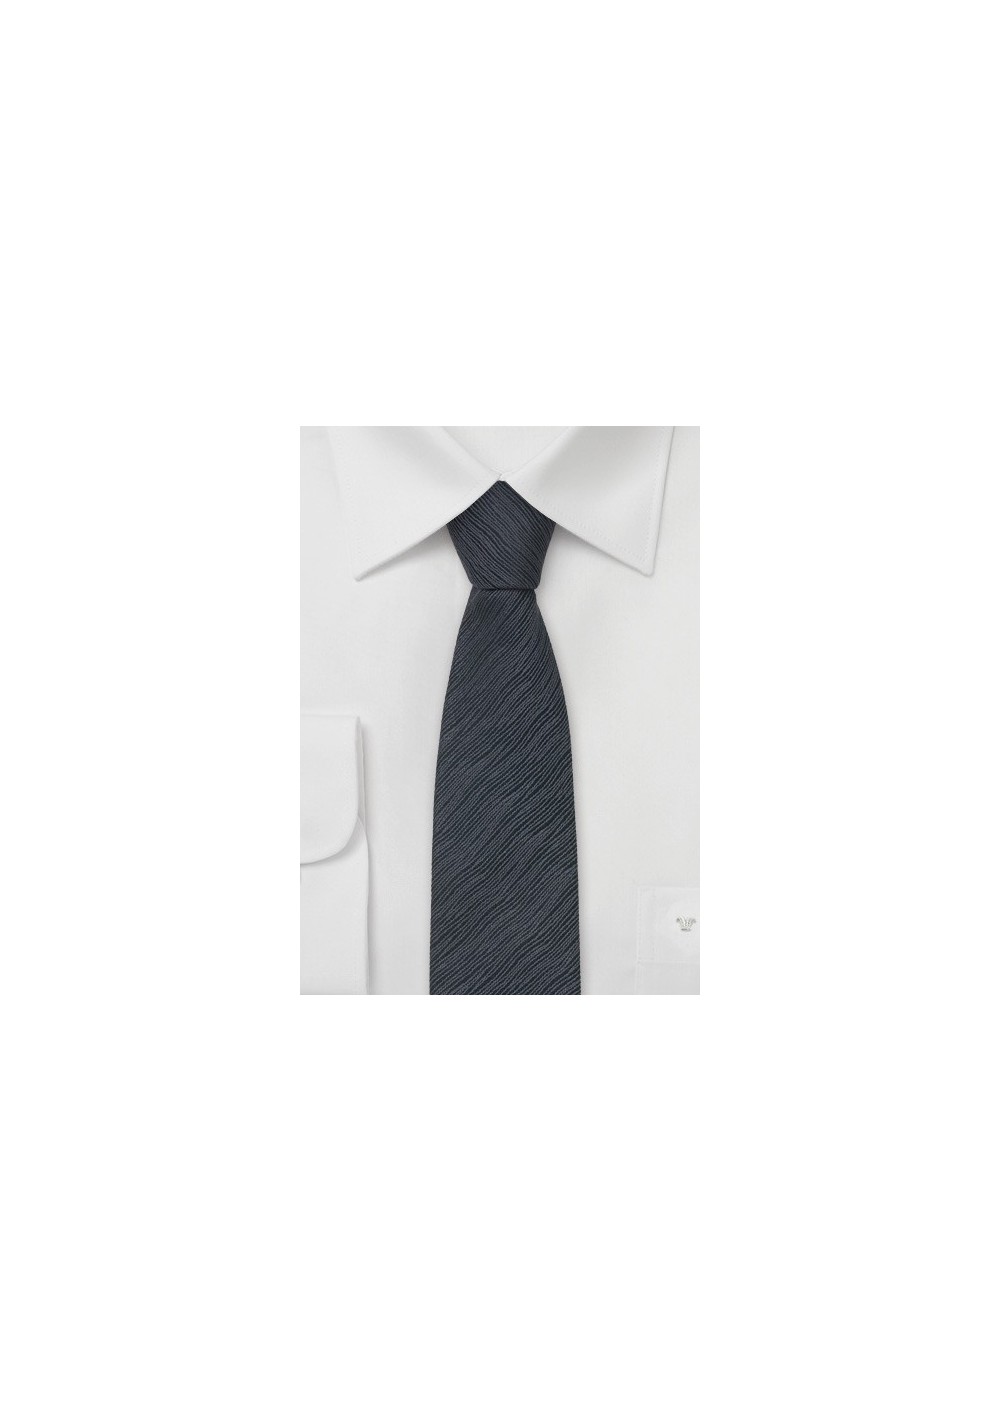 Skinny Necktie in Charcoal Gray